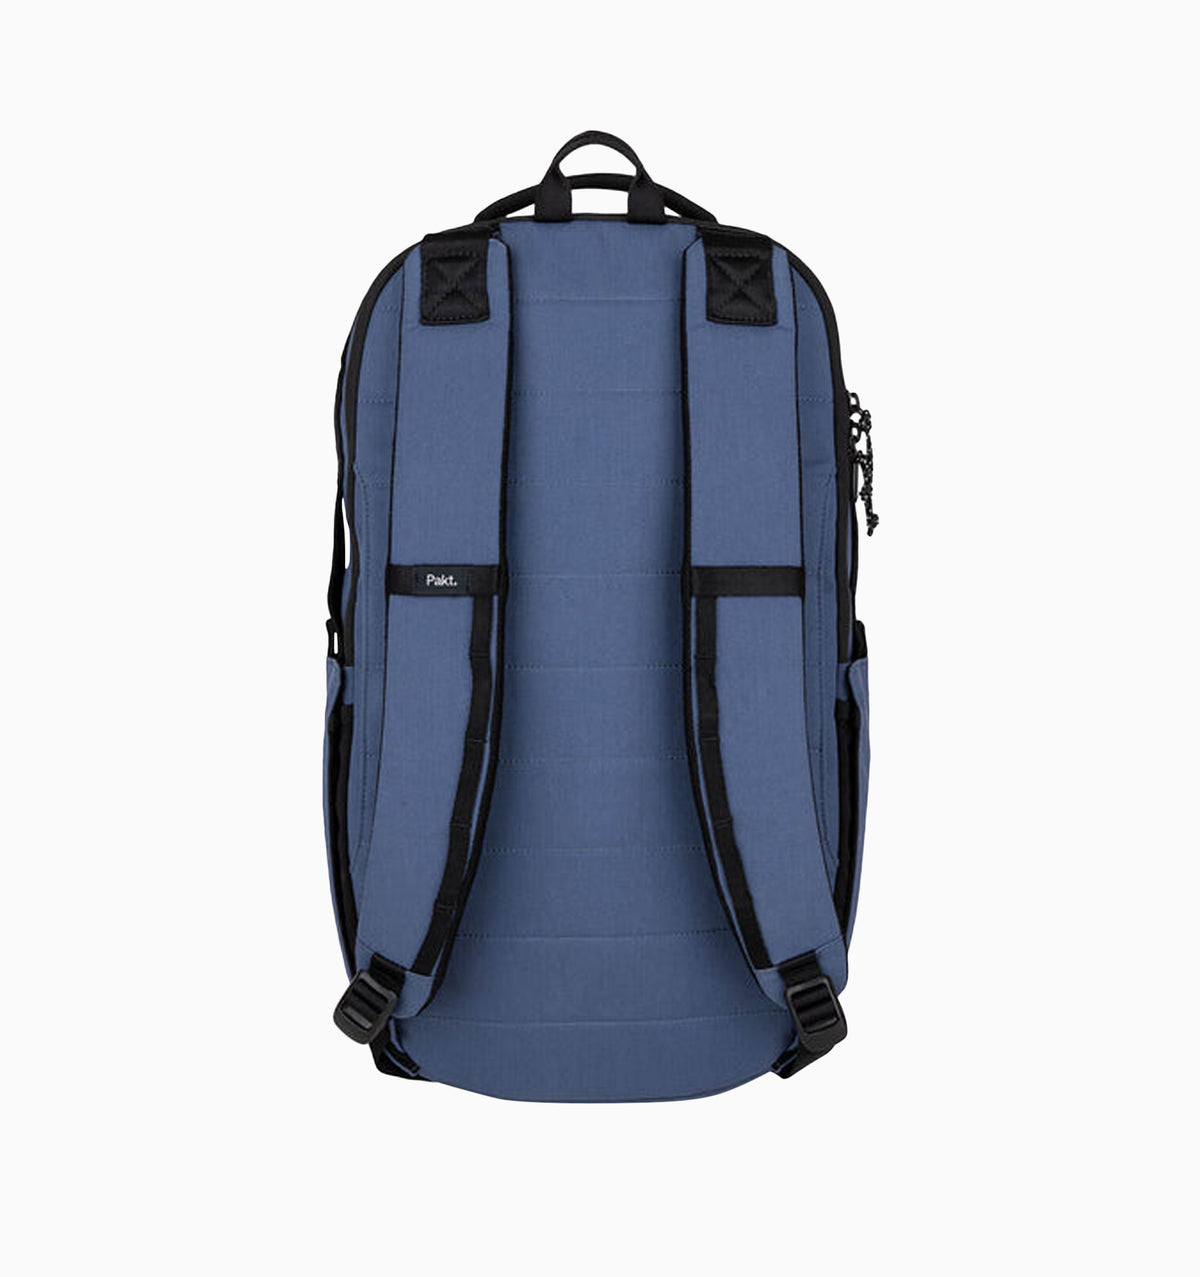 Pakt 16" Everyday Backpack 22L - Ocean